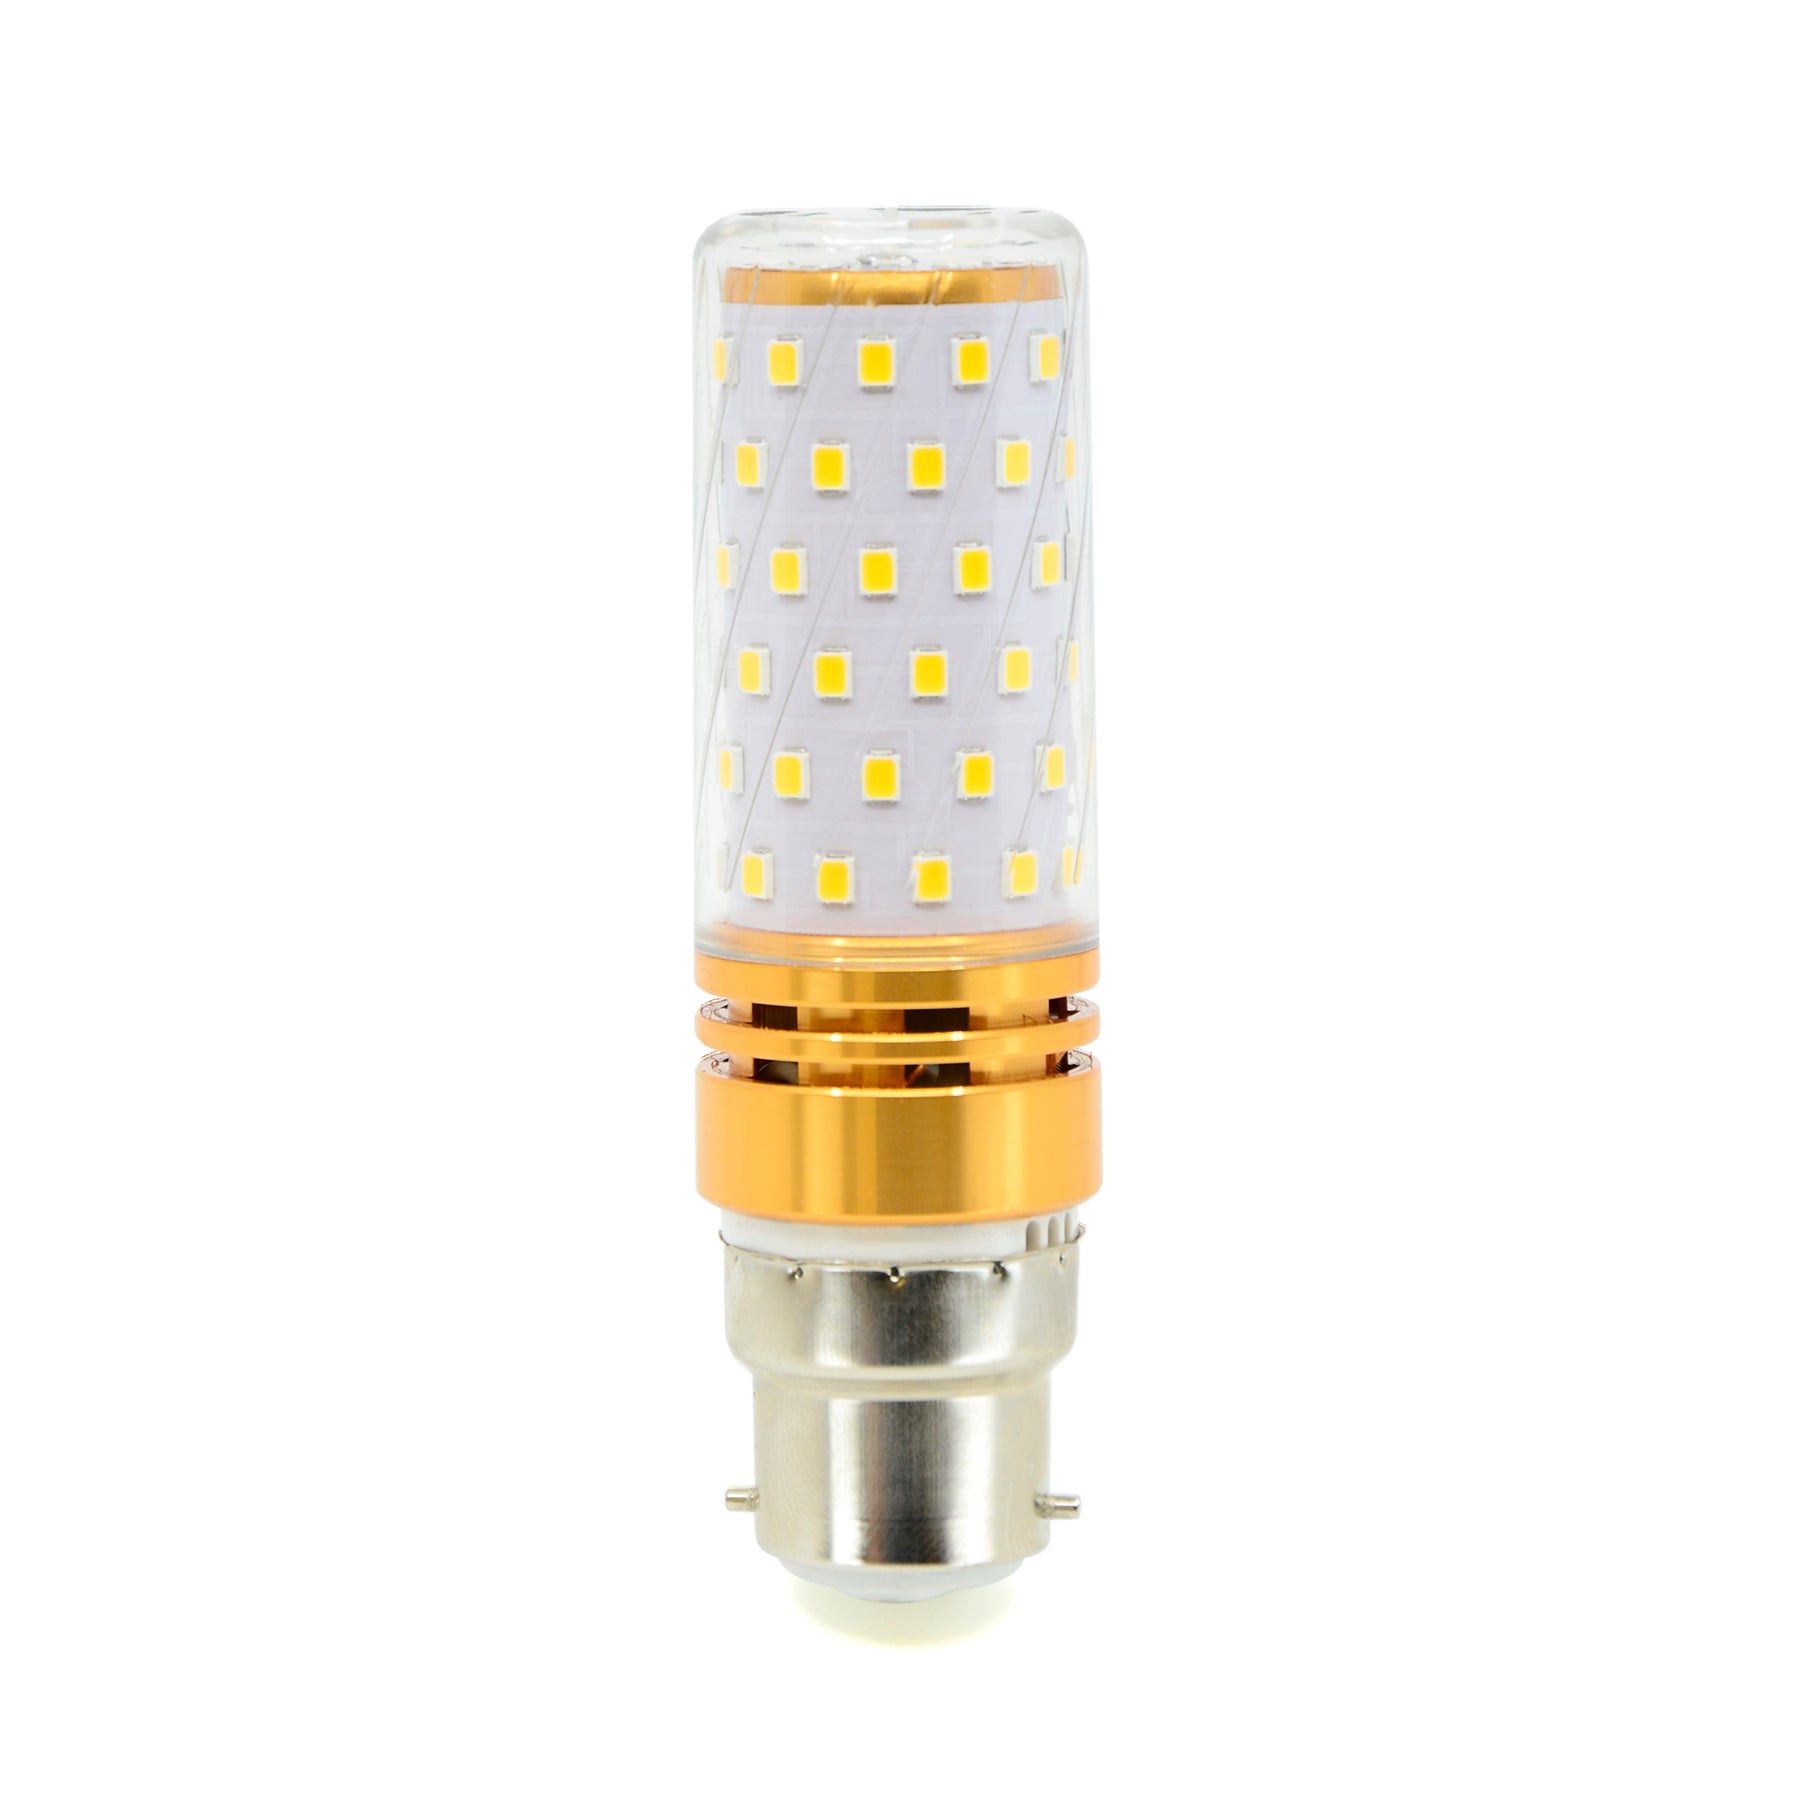 G.W.S LED Wholesale LED Bulbs 16W / Warm White (3000K) / 1 B22 Bayonet LED Corn Bulb